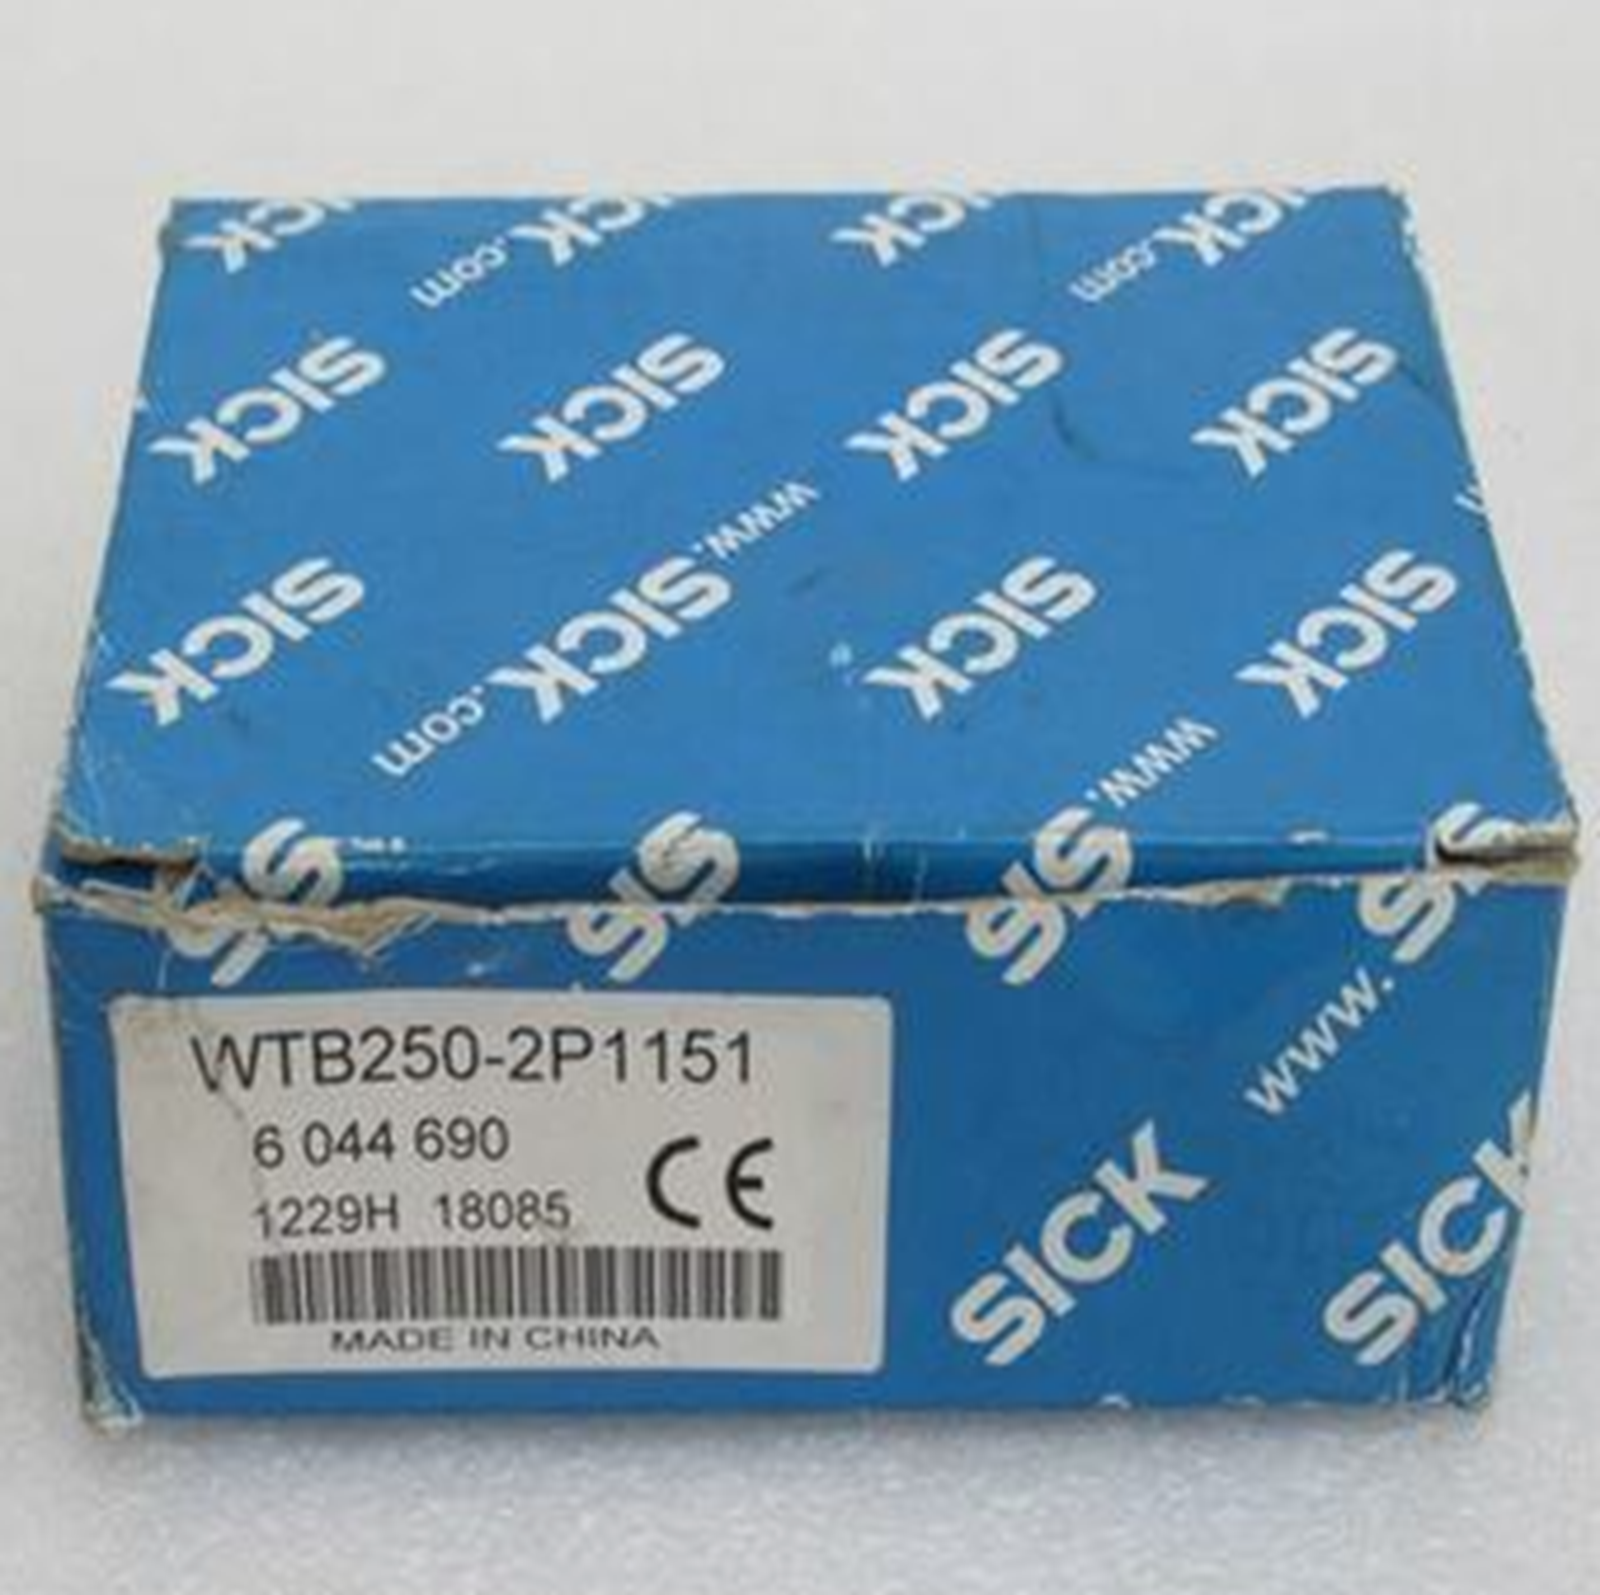 SICK WTB250-2P1151 Photoelectric Sensor